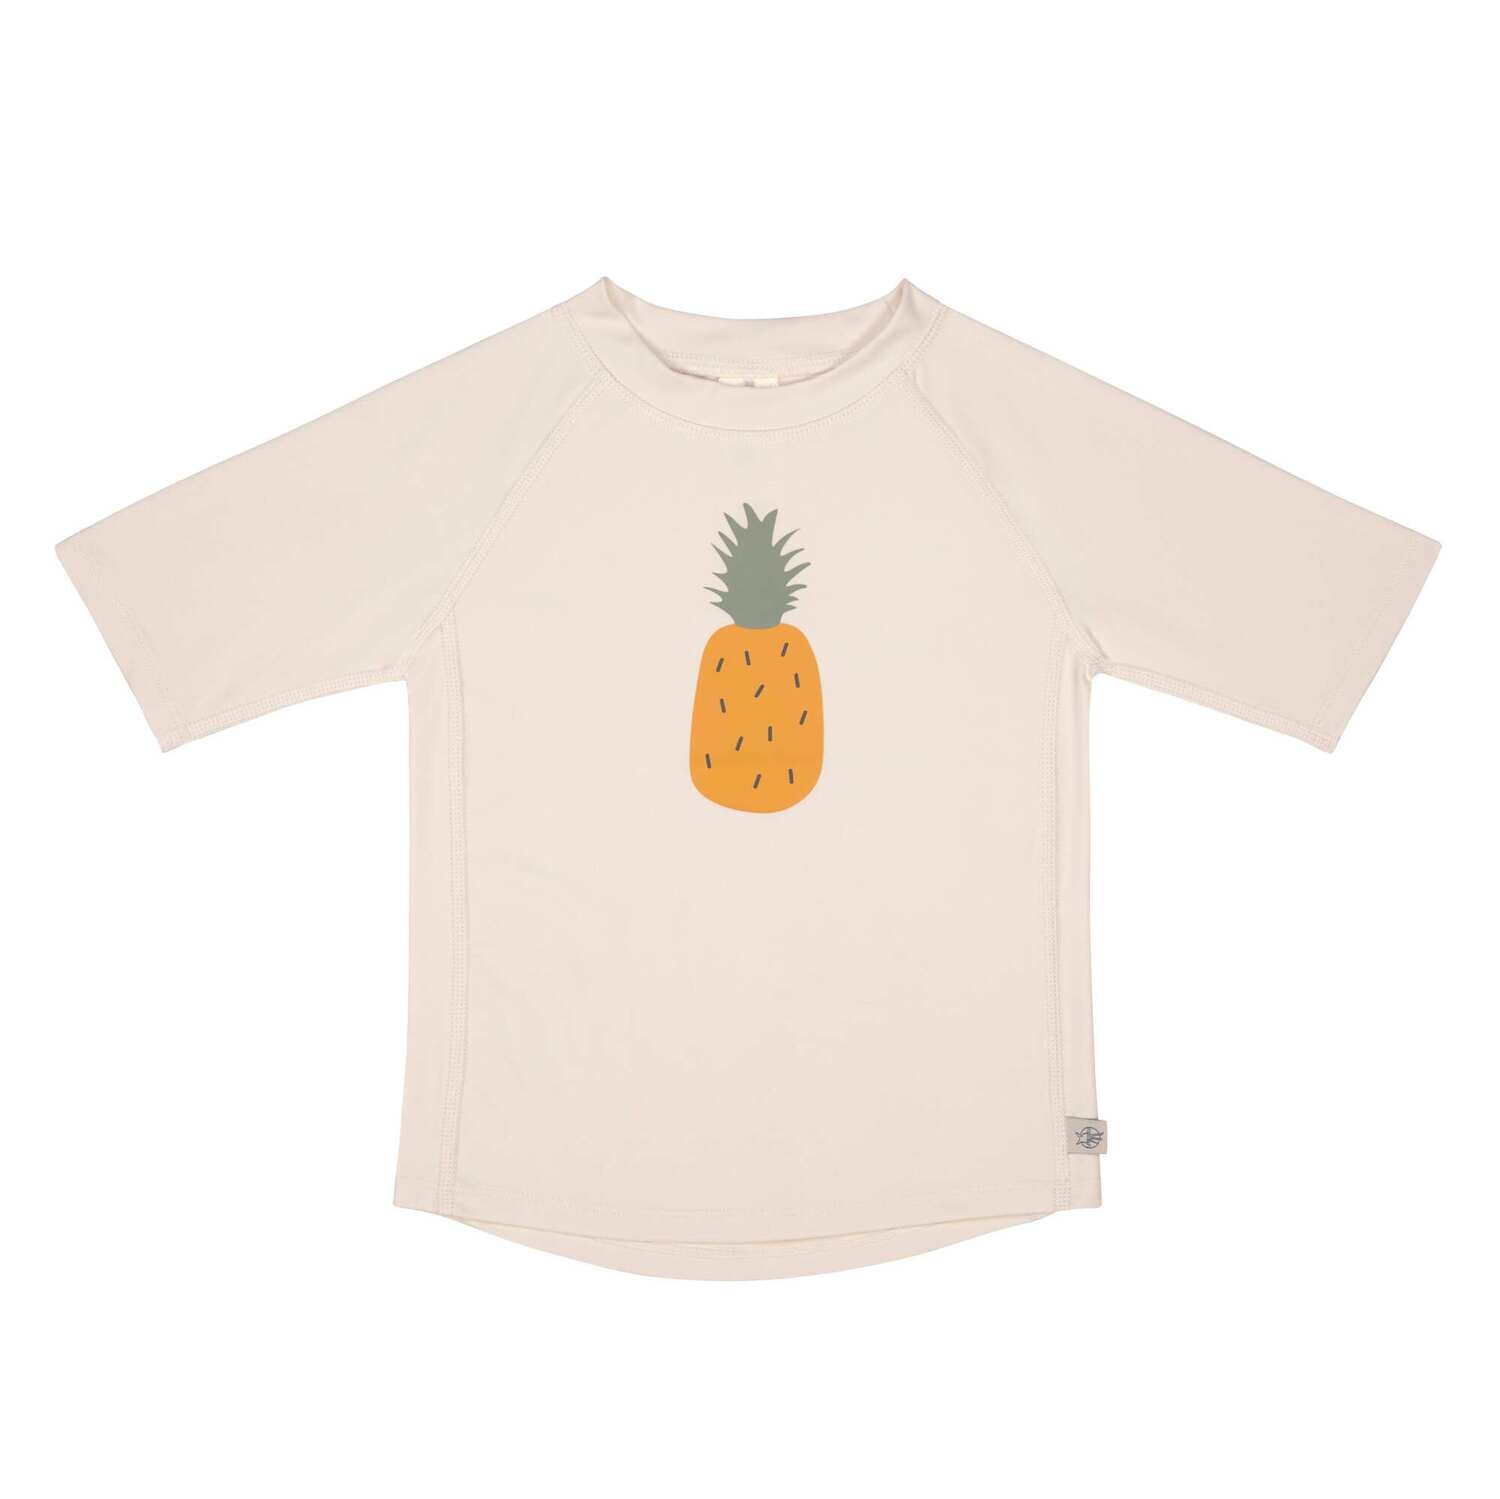 Lassig - Short Sleeve Rashguard - Pineapple Offwhite